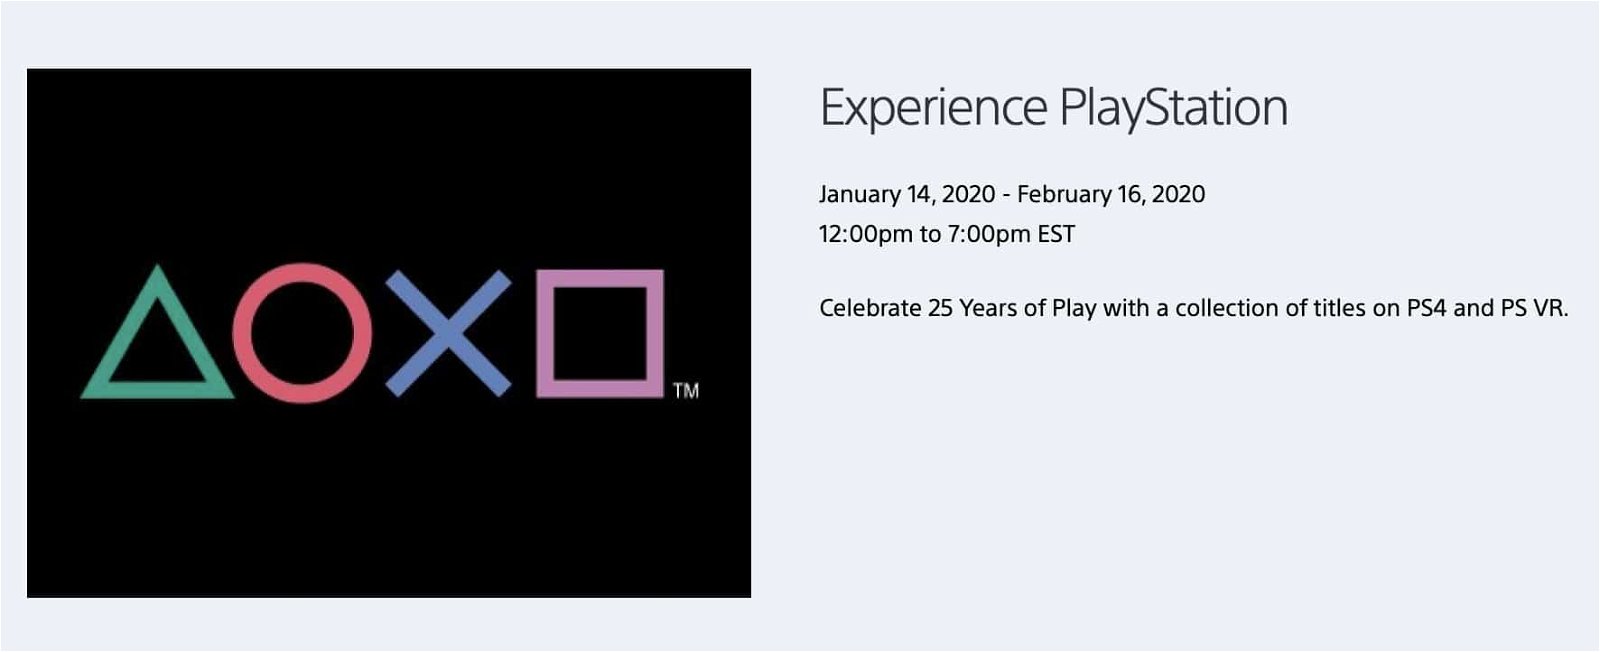 Experience PlayStation Jan 14 - February 16